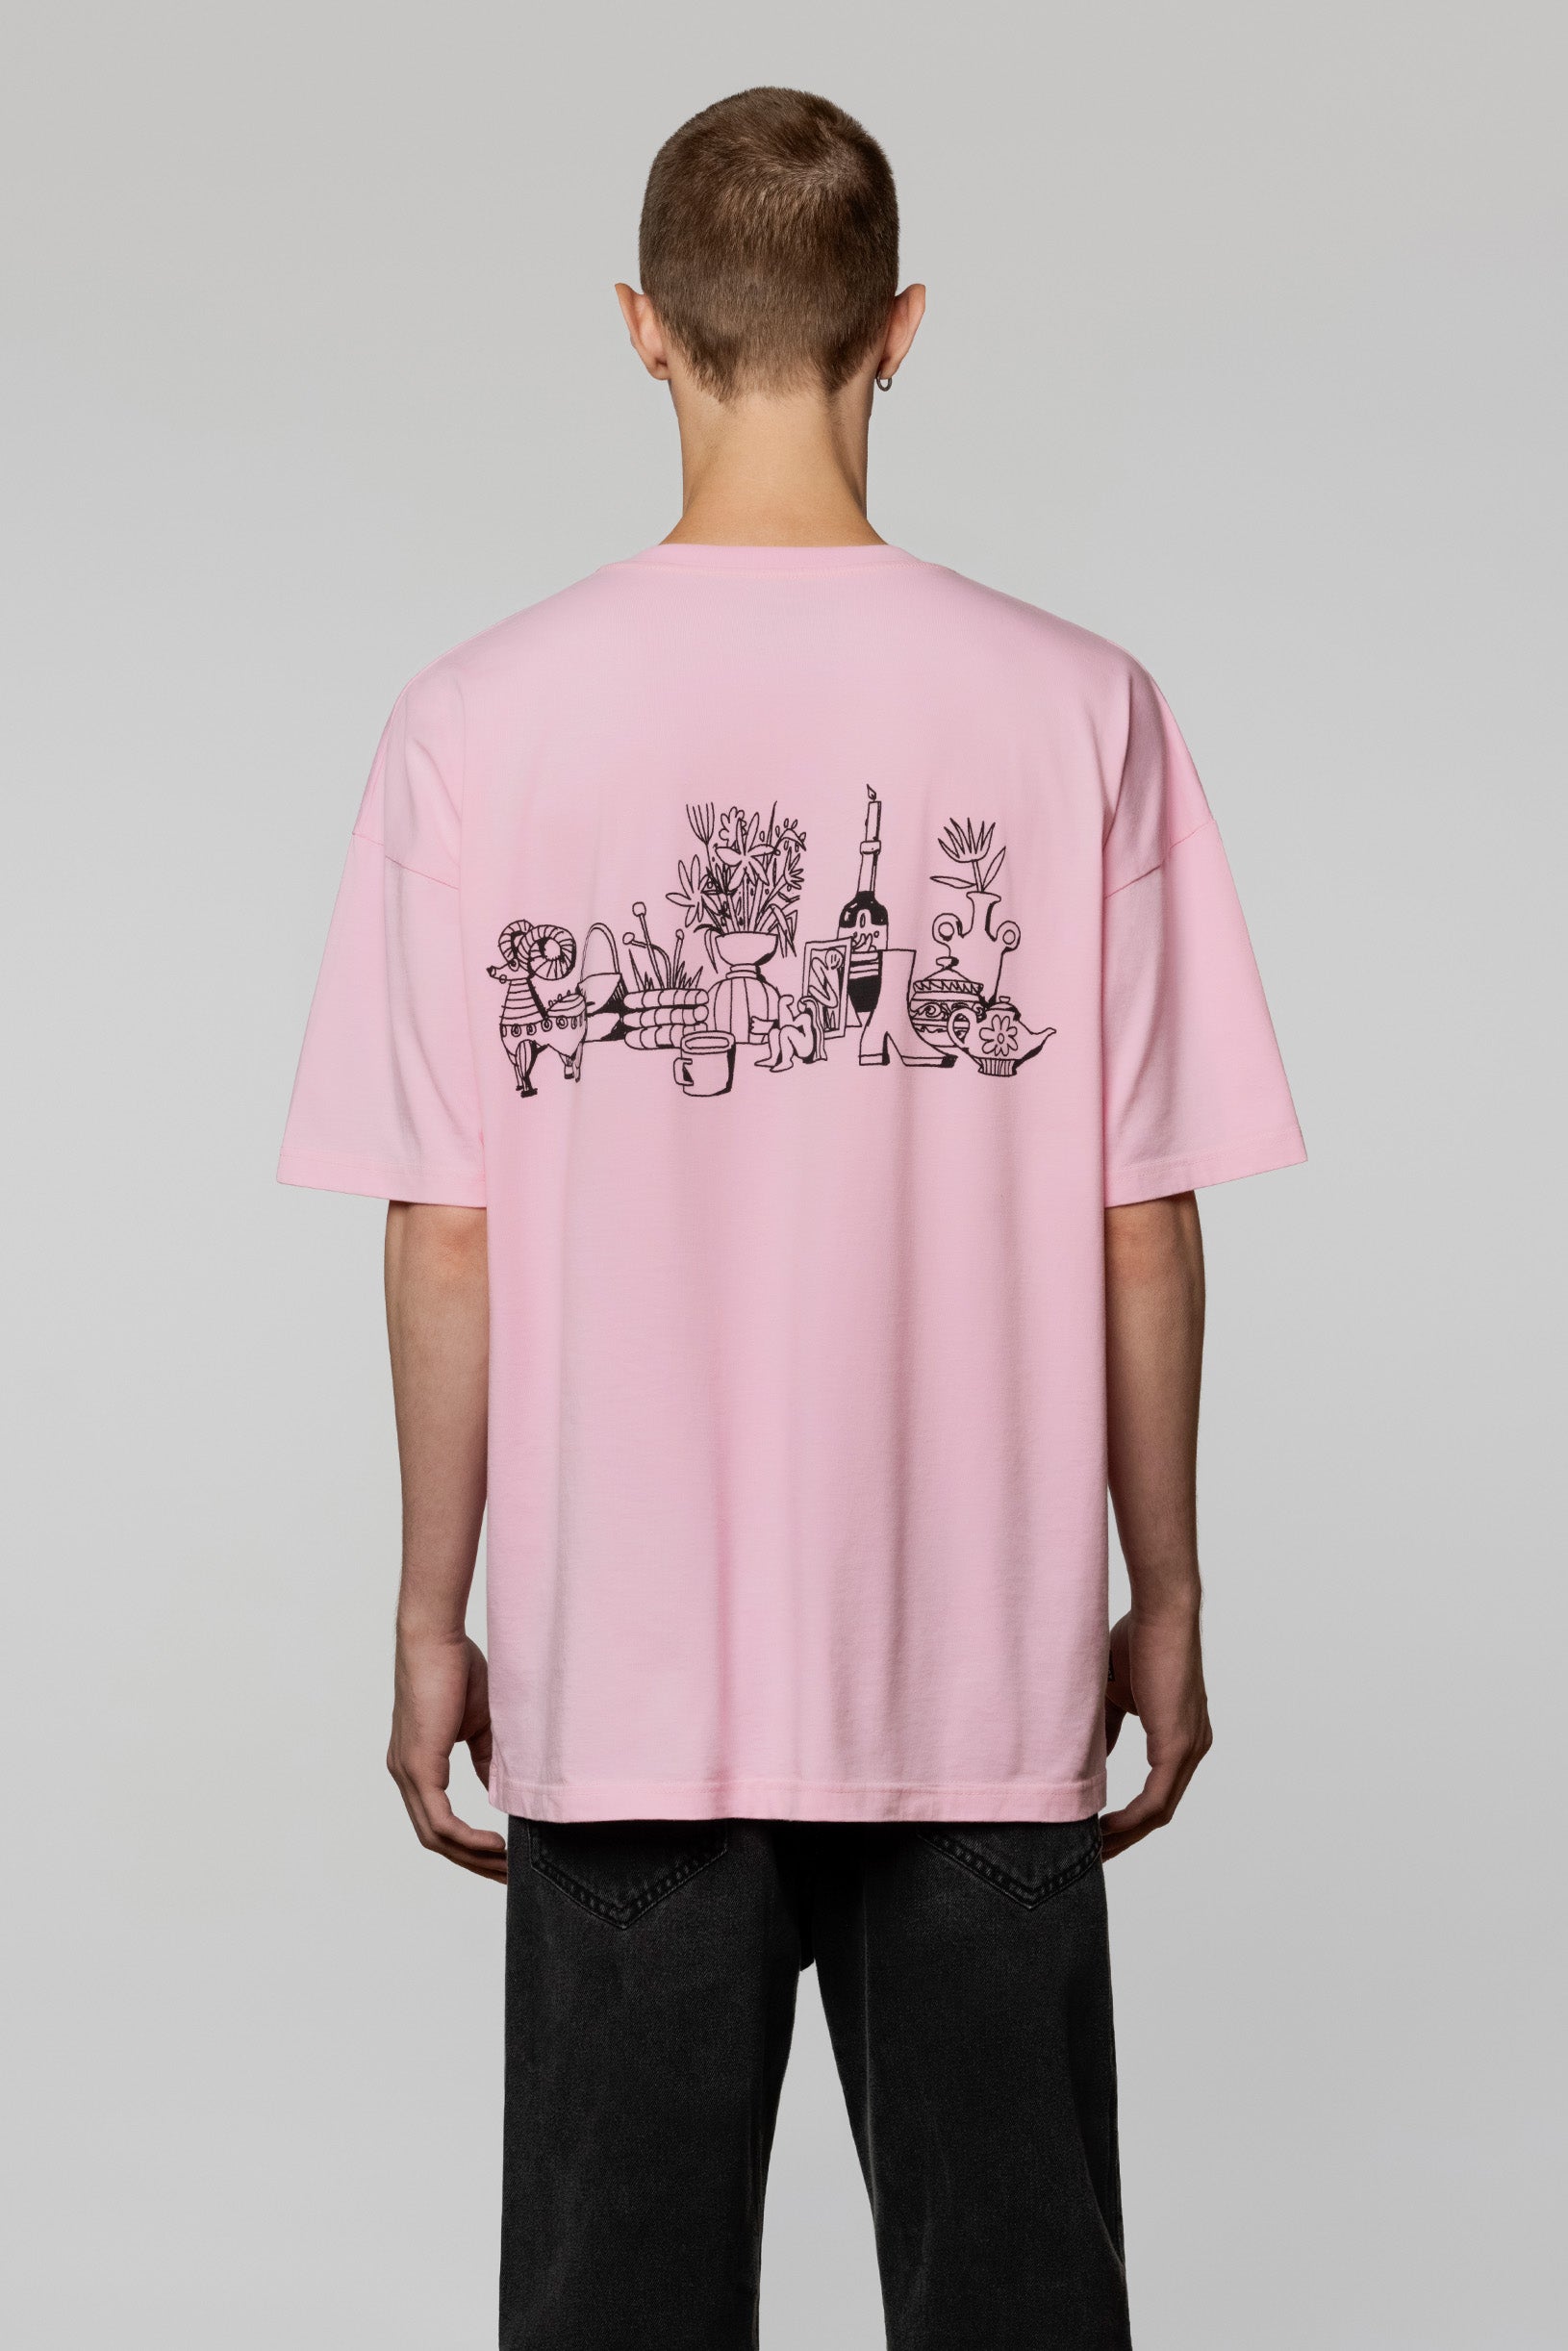 Syndicate x Derega Art Weapon T-shirt Pink